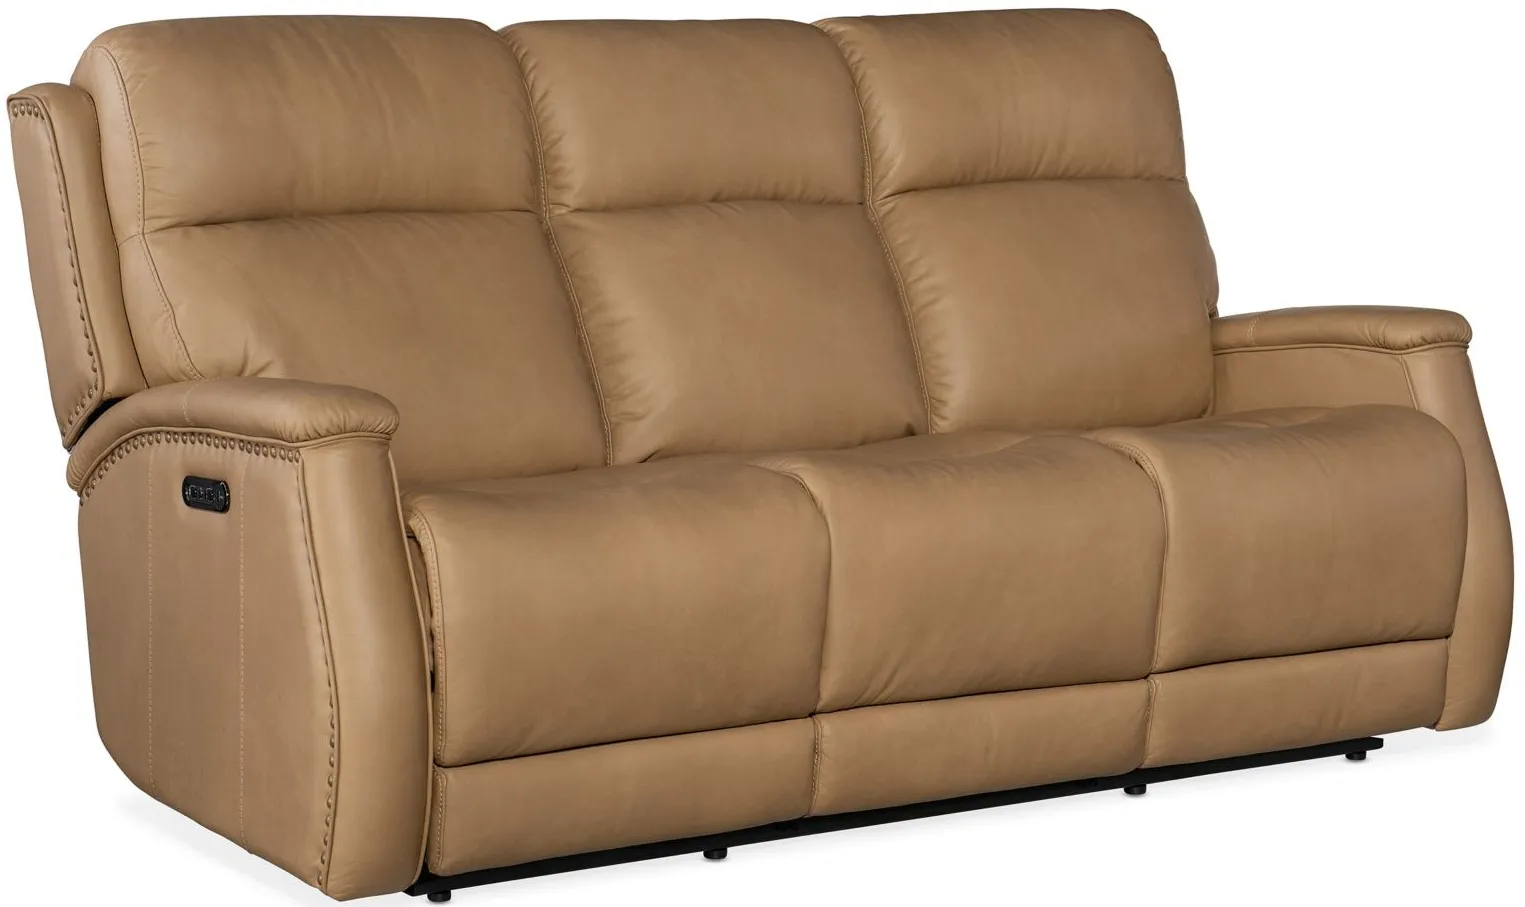 Rhea Zero Gravity Power Recline Sofa with Power Headrest in Sahara Sand by Hooker Furniture